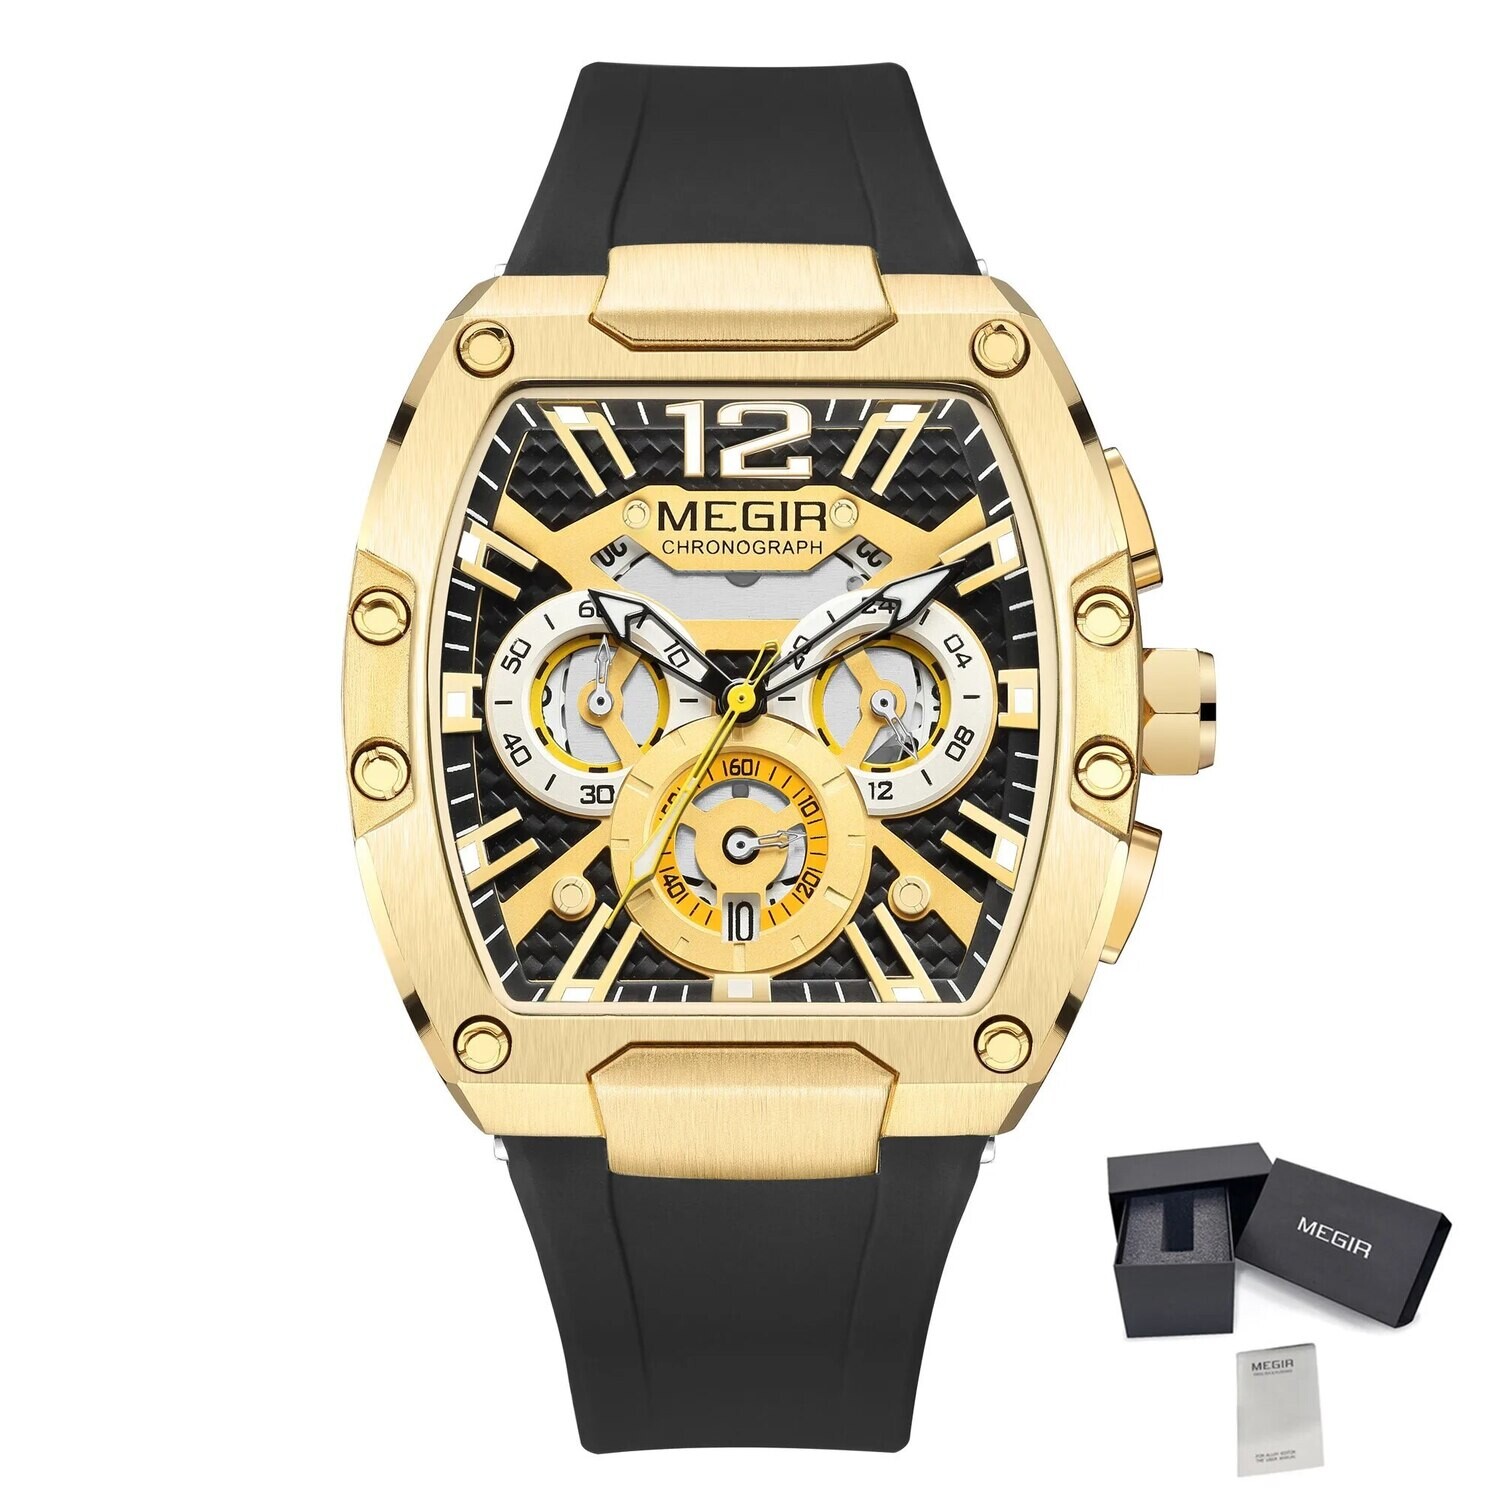 MEGIR Original Fashion Mens Watches Sport Military Chronograph Calendar Silicone Strap Quartz Wrist Watch Relogio Masculino, Color: Gold Black